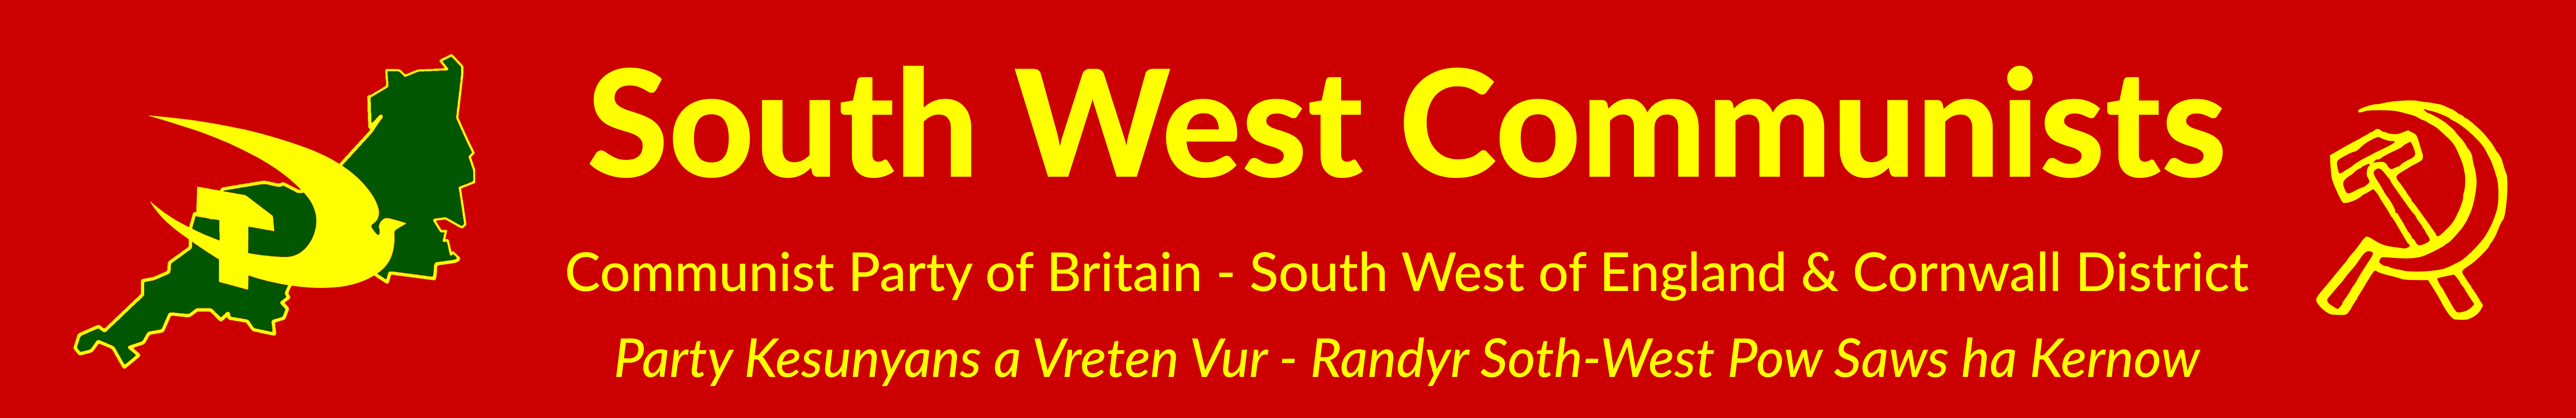 South West Communists